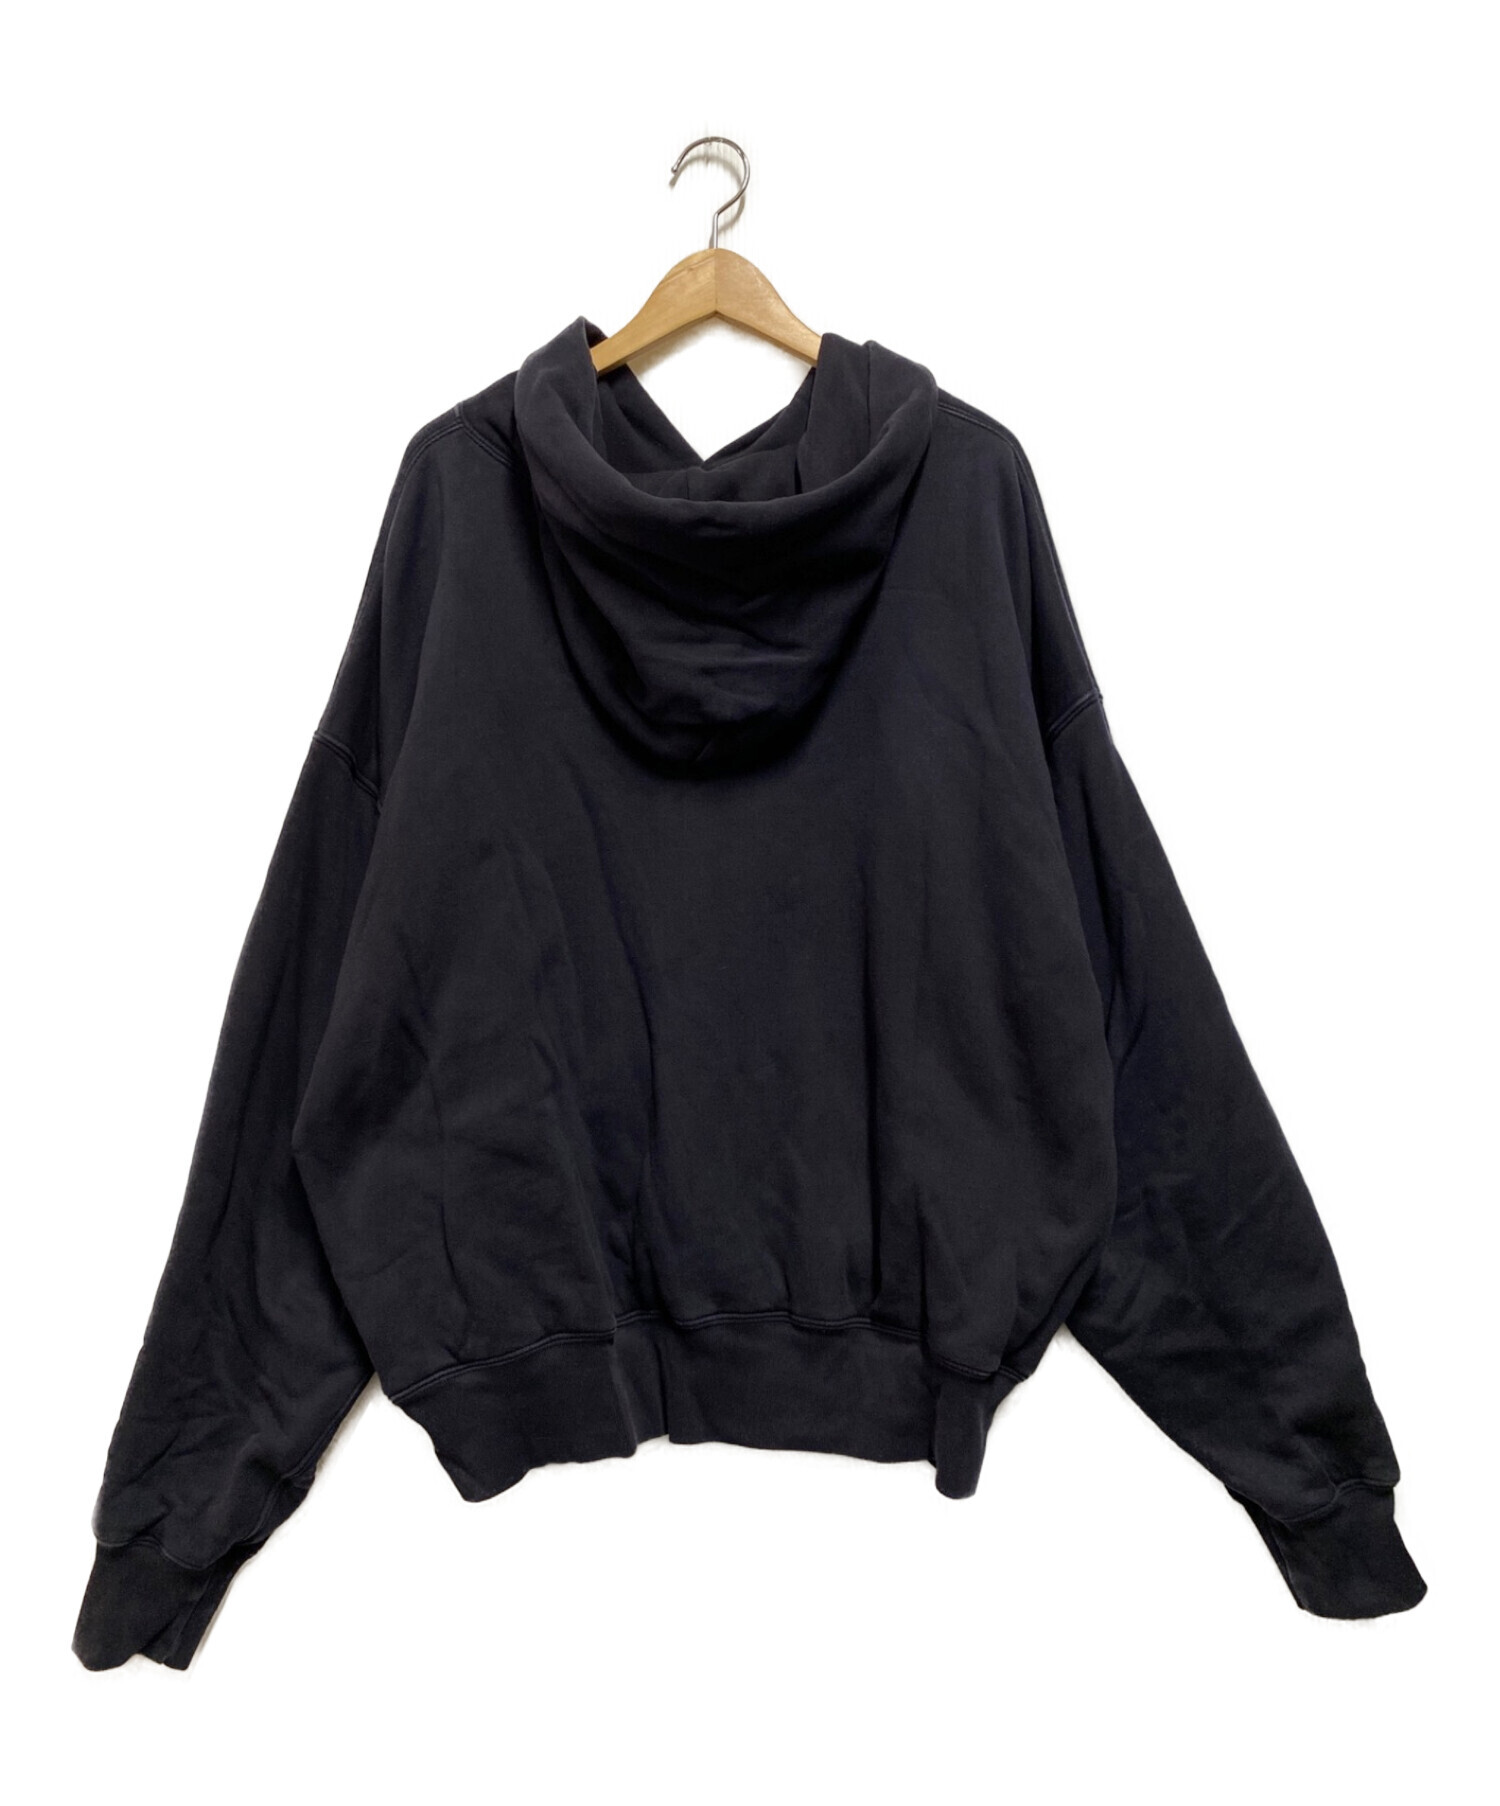 GAP (ギャップ) YZY (イージー) Perfect hoodie ブラック サイズ:XL